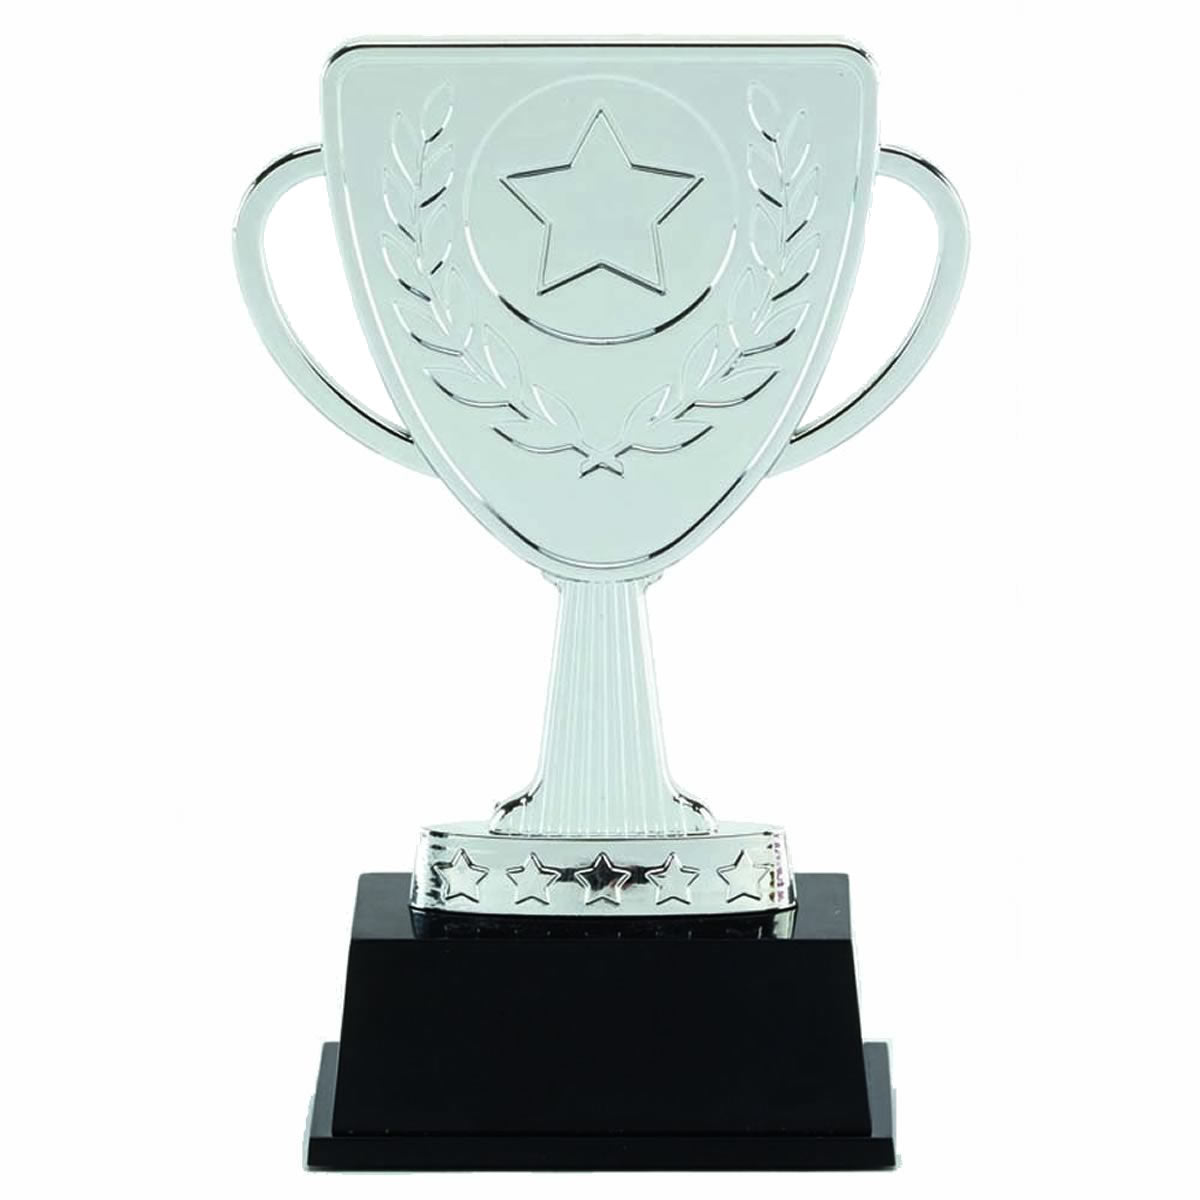 Budget Lion Cup Award - Gold, Silver & Bronze